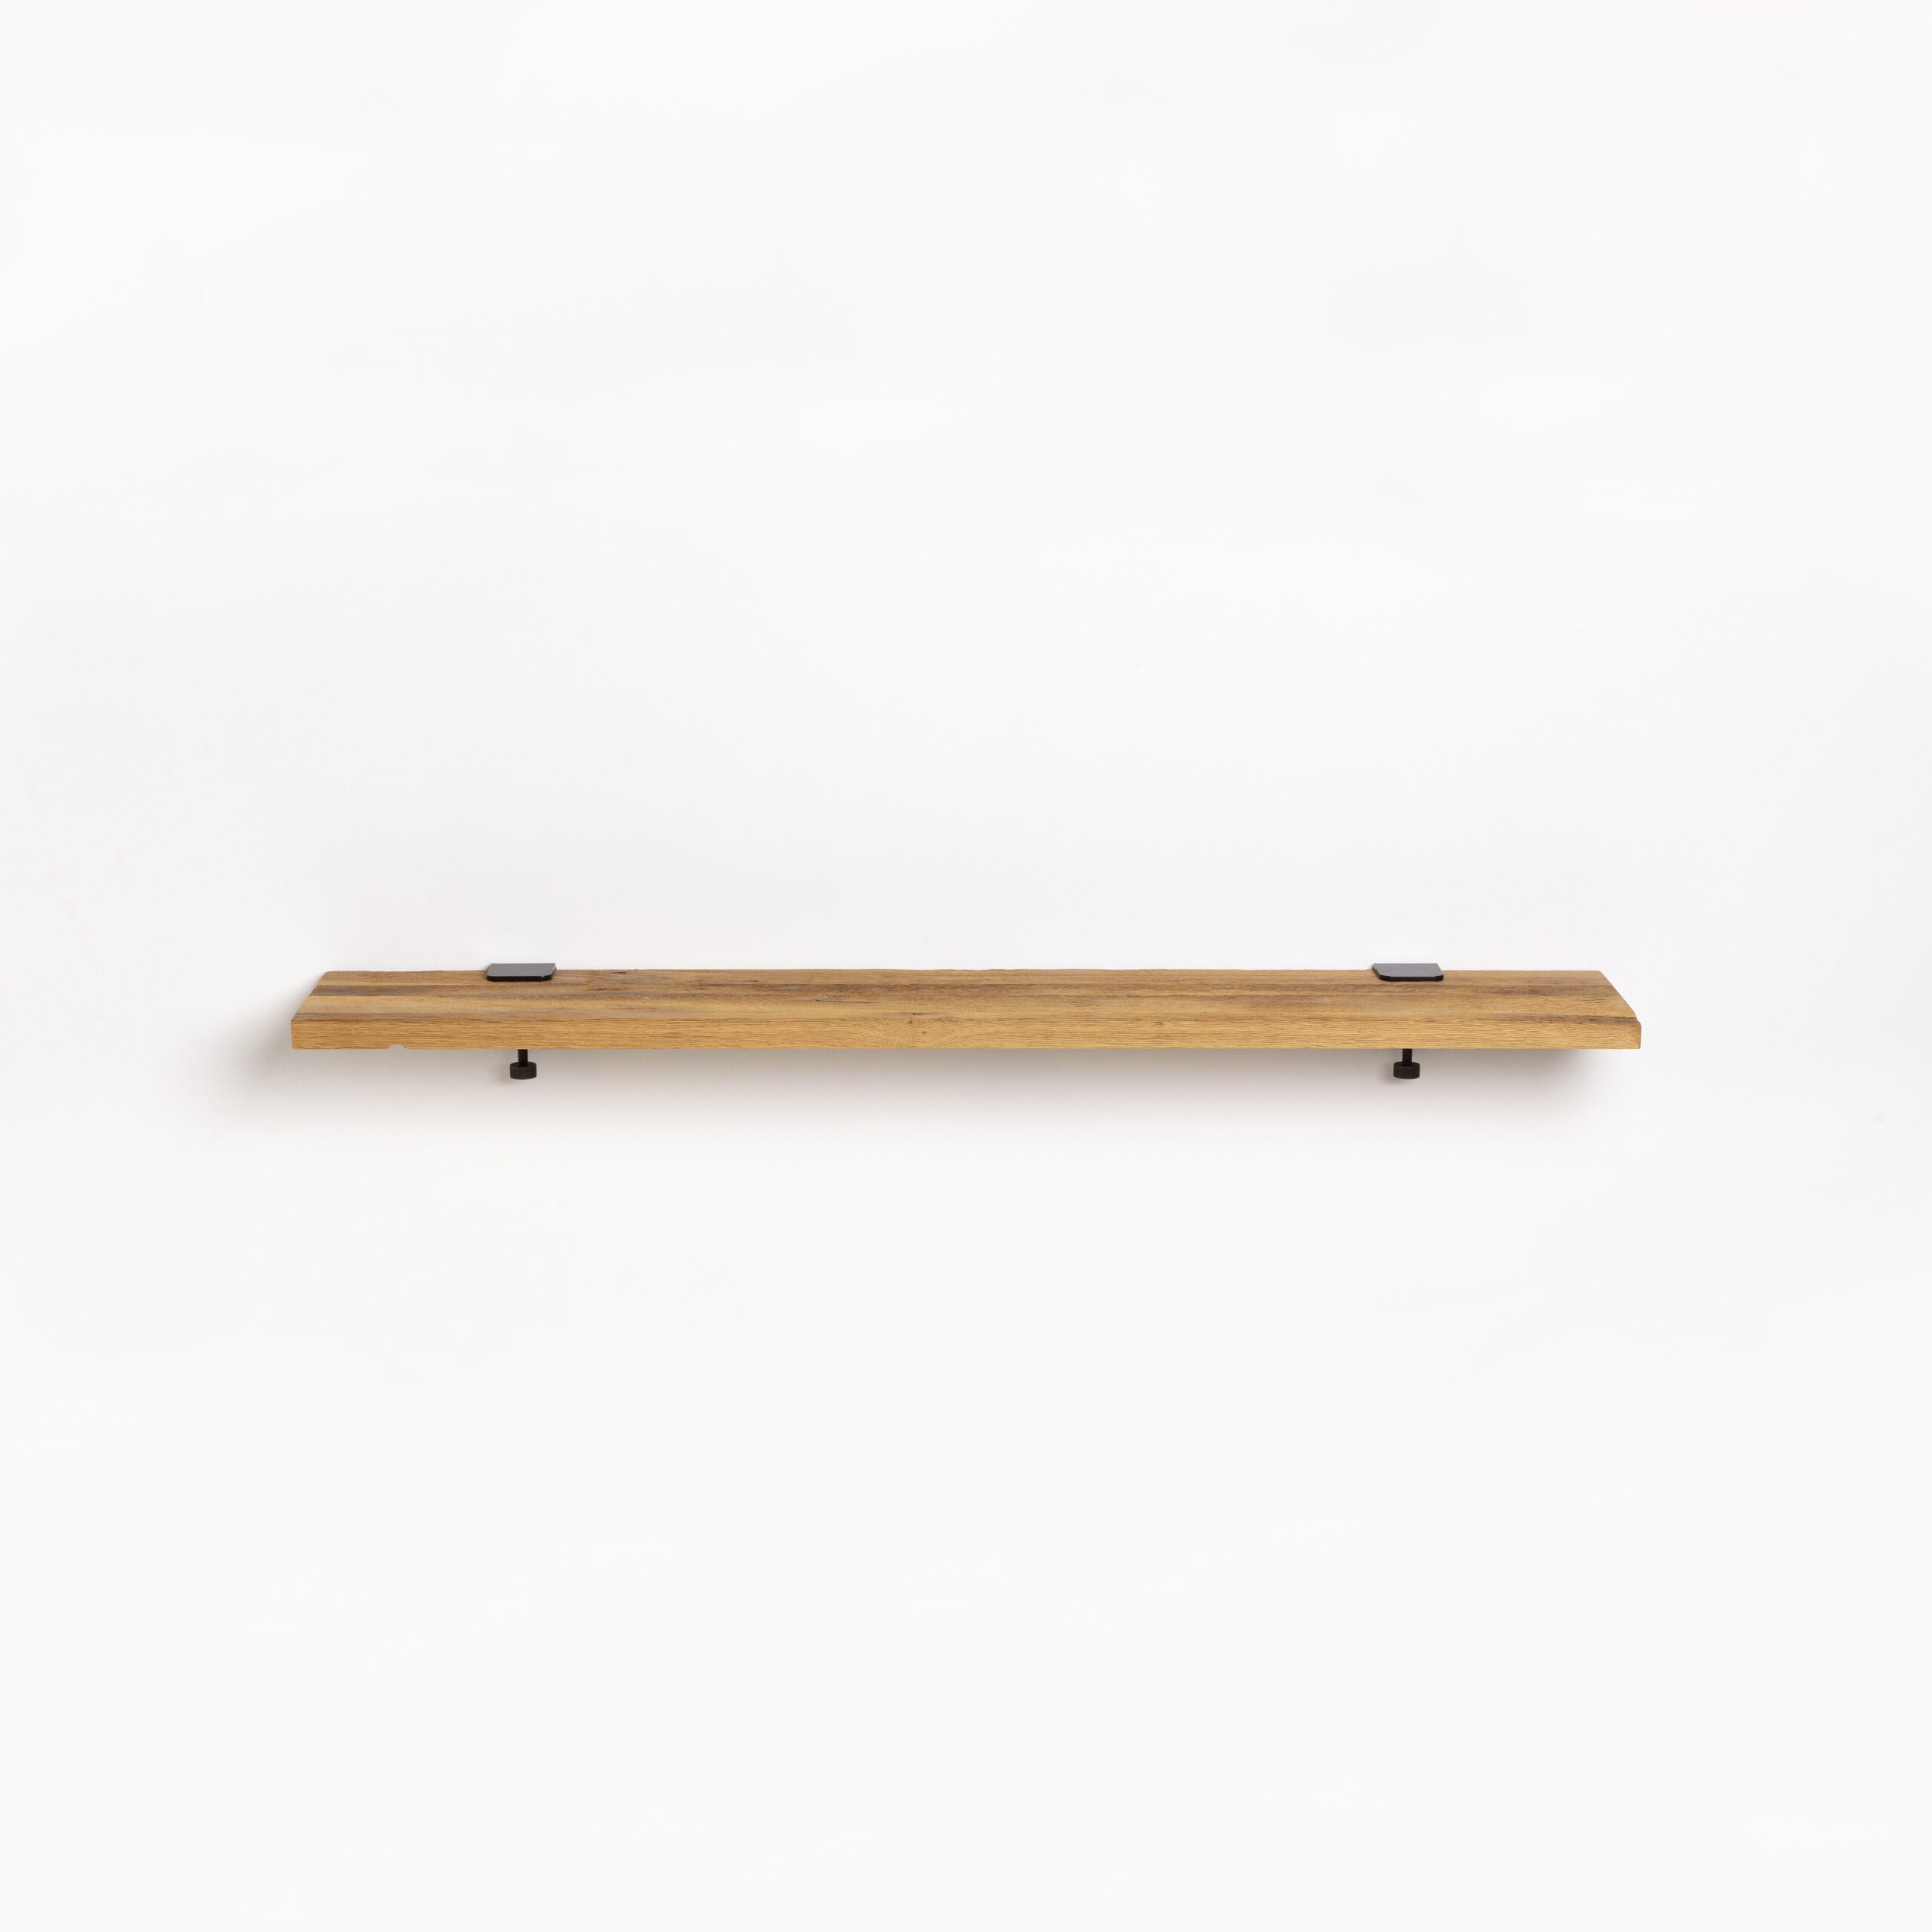 Reclaimed wood wall shelf - 60 to 150cm